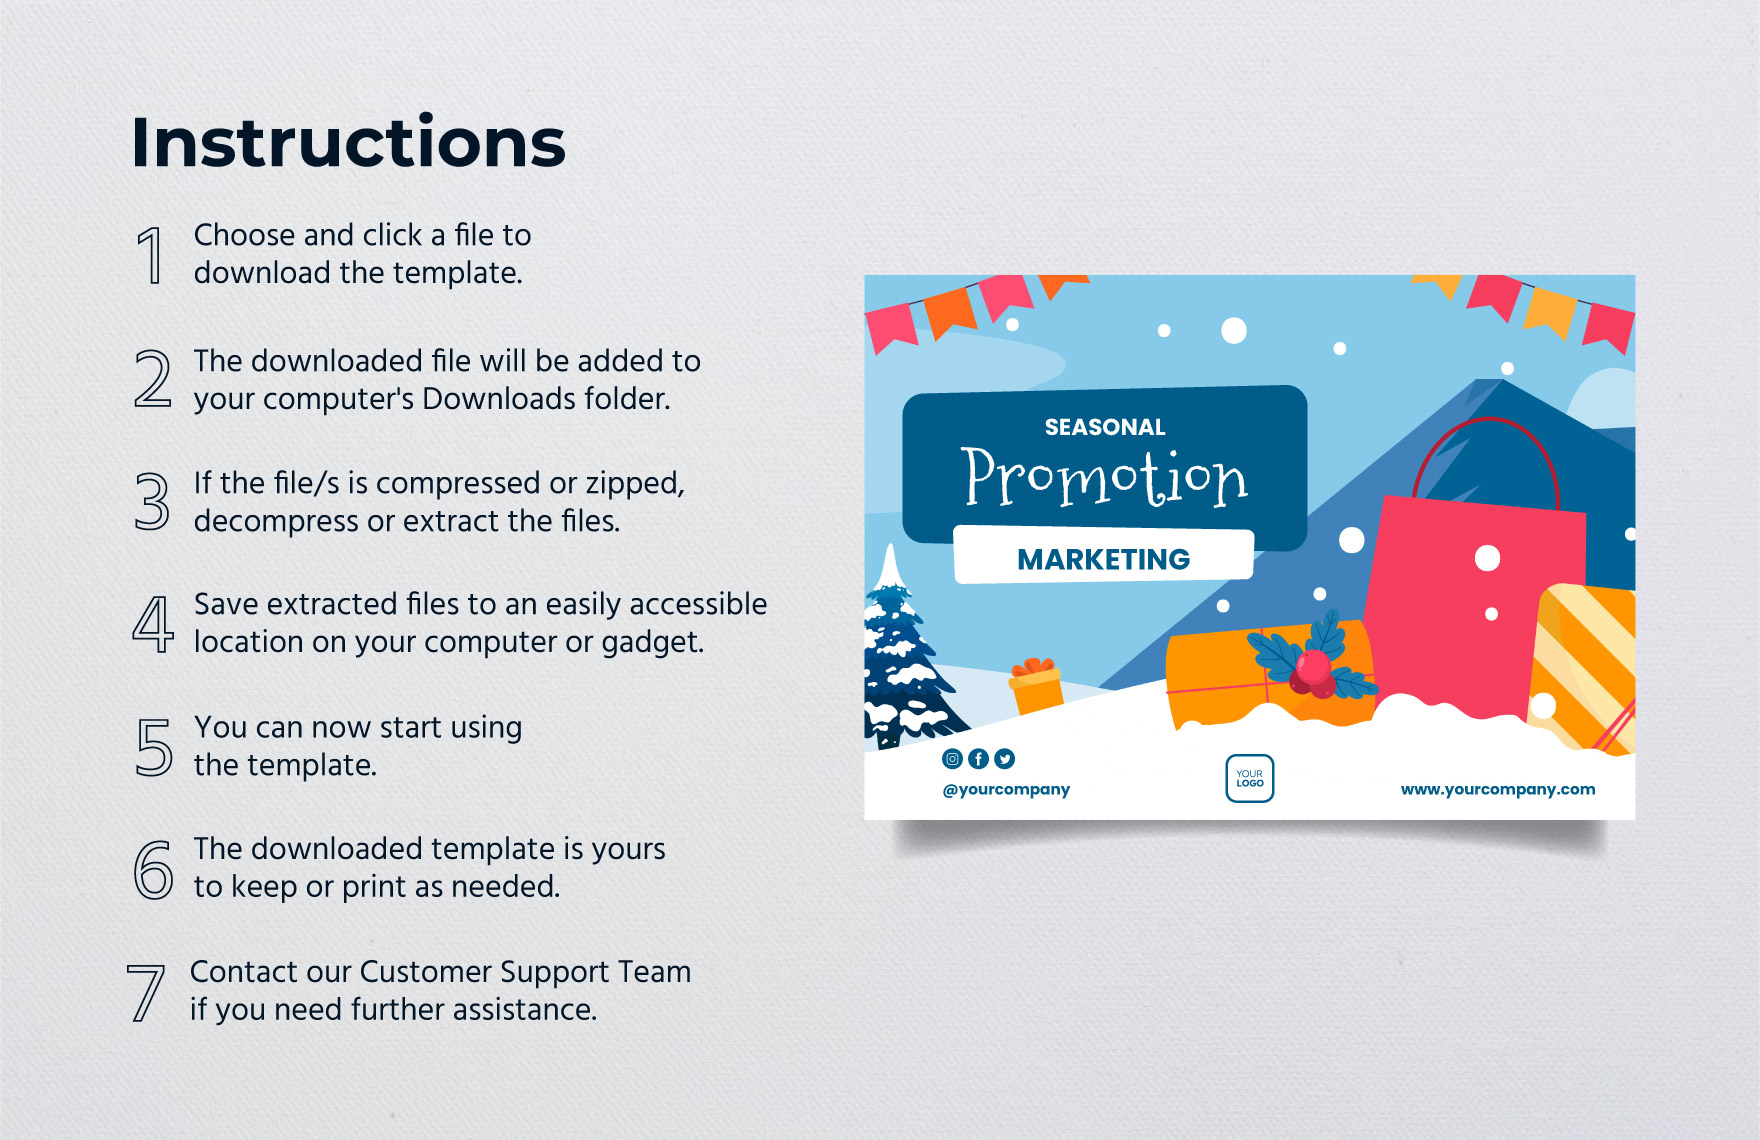 Seasonal Promotion Marketing Sign Template